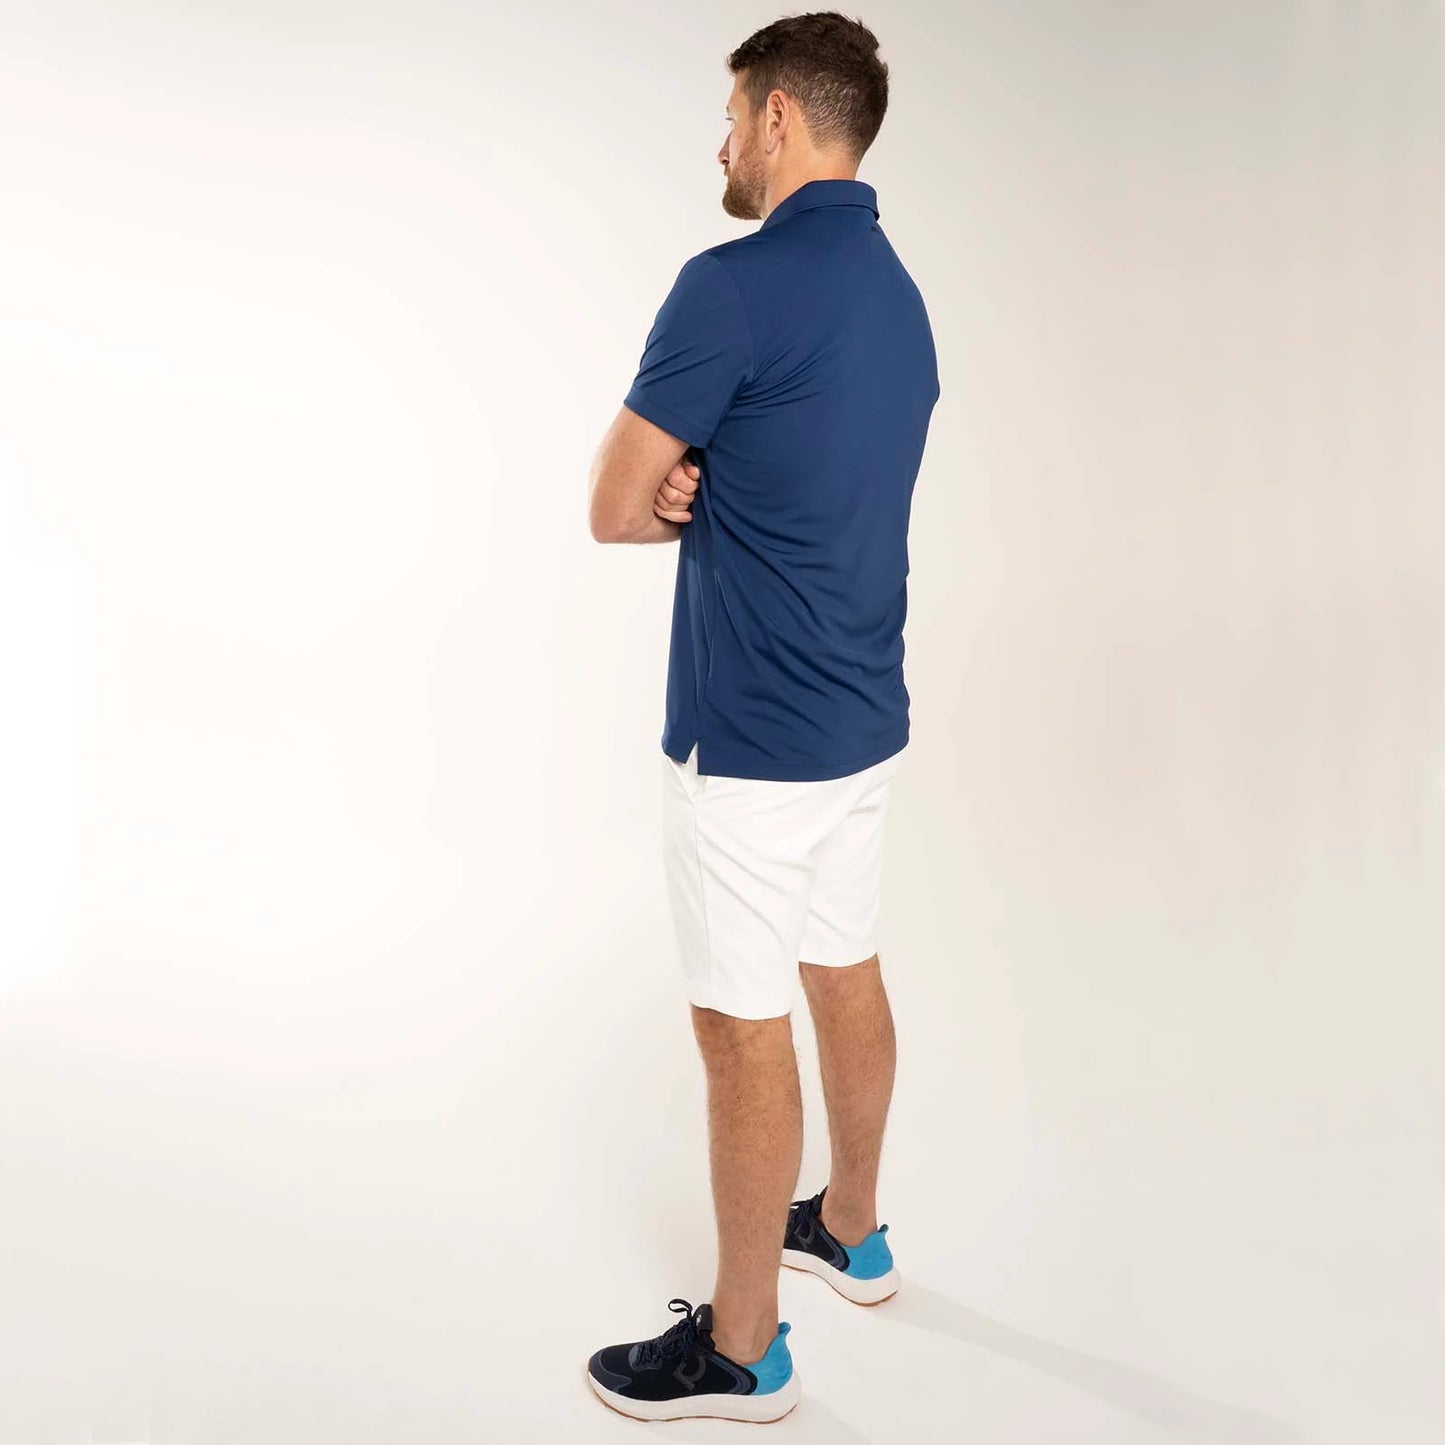 【特價】J LINDEBERG Chad 常規版型高爾夫 Polo 衫 (莊園藍)-GMJT08567